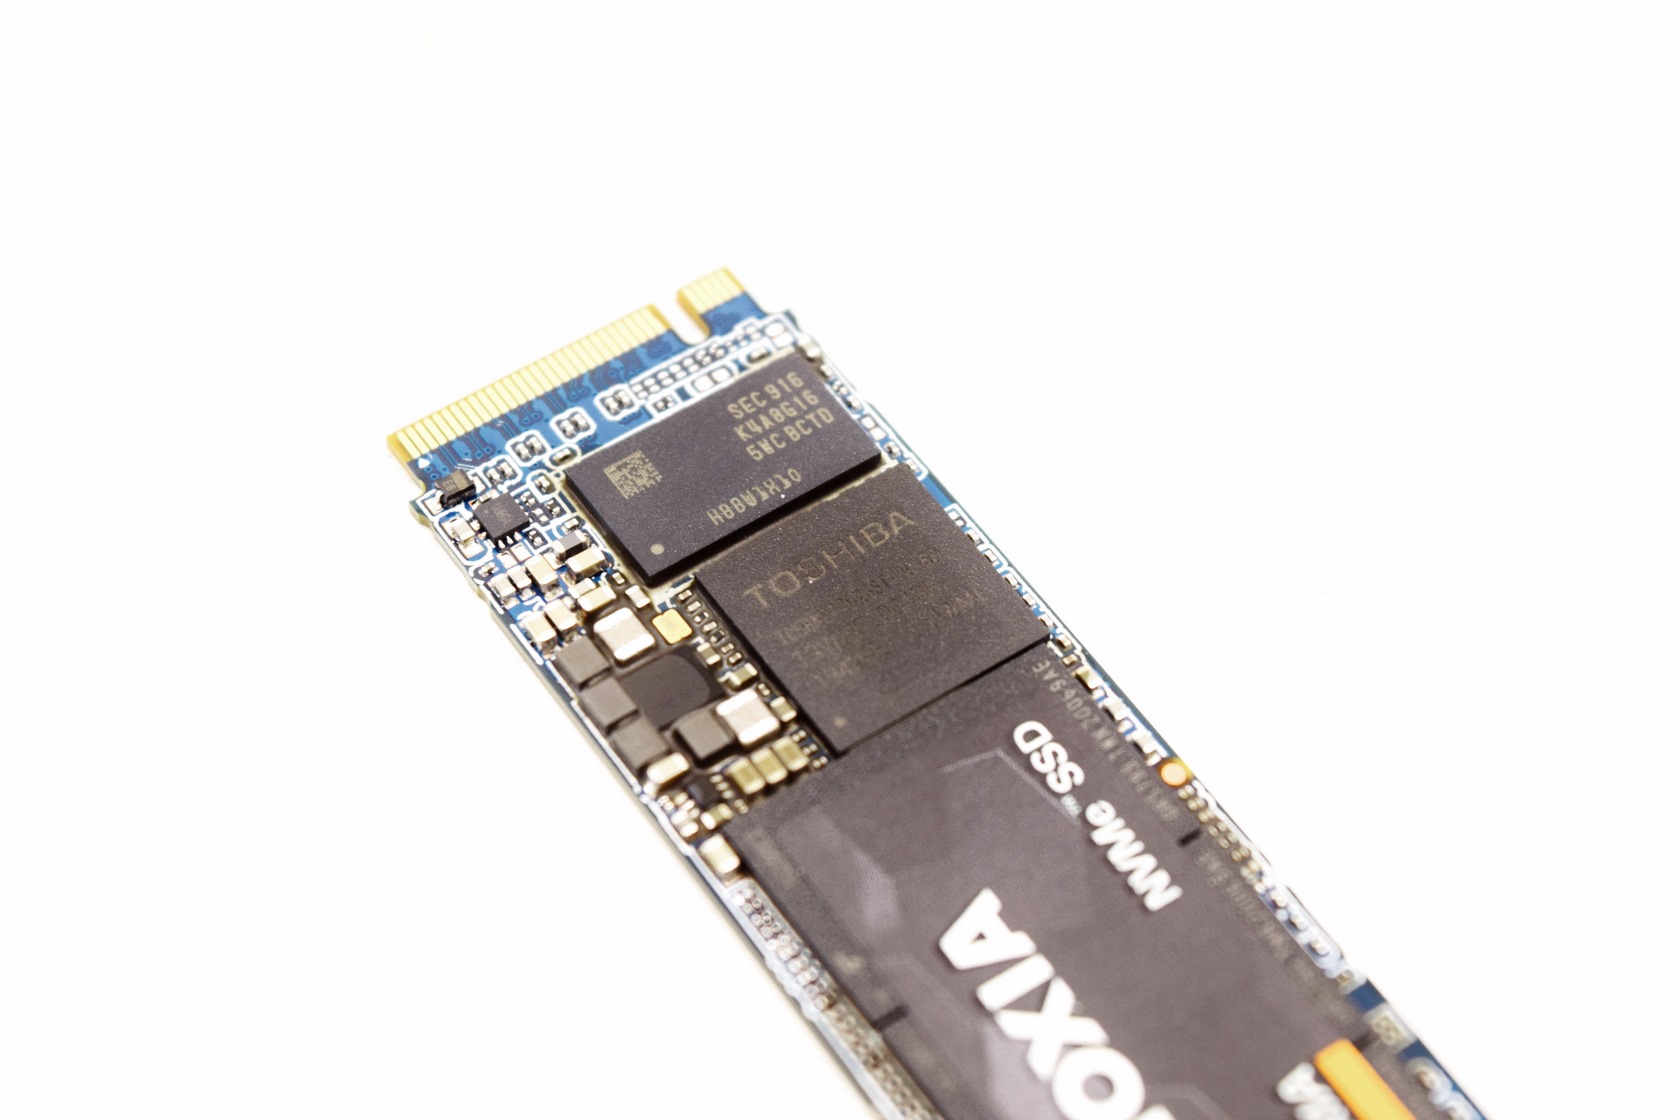 KIOXIA Exceria 1TB M.2 NVMe SSD Review